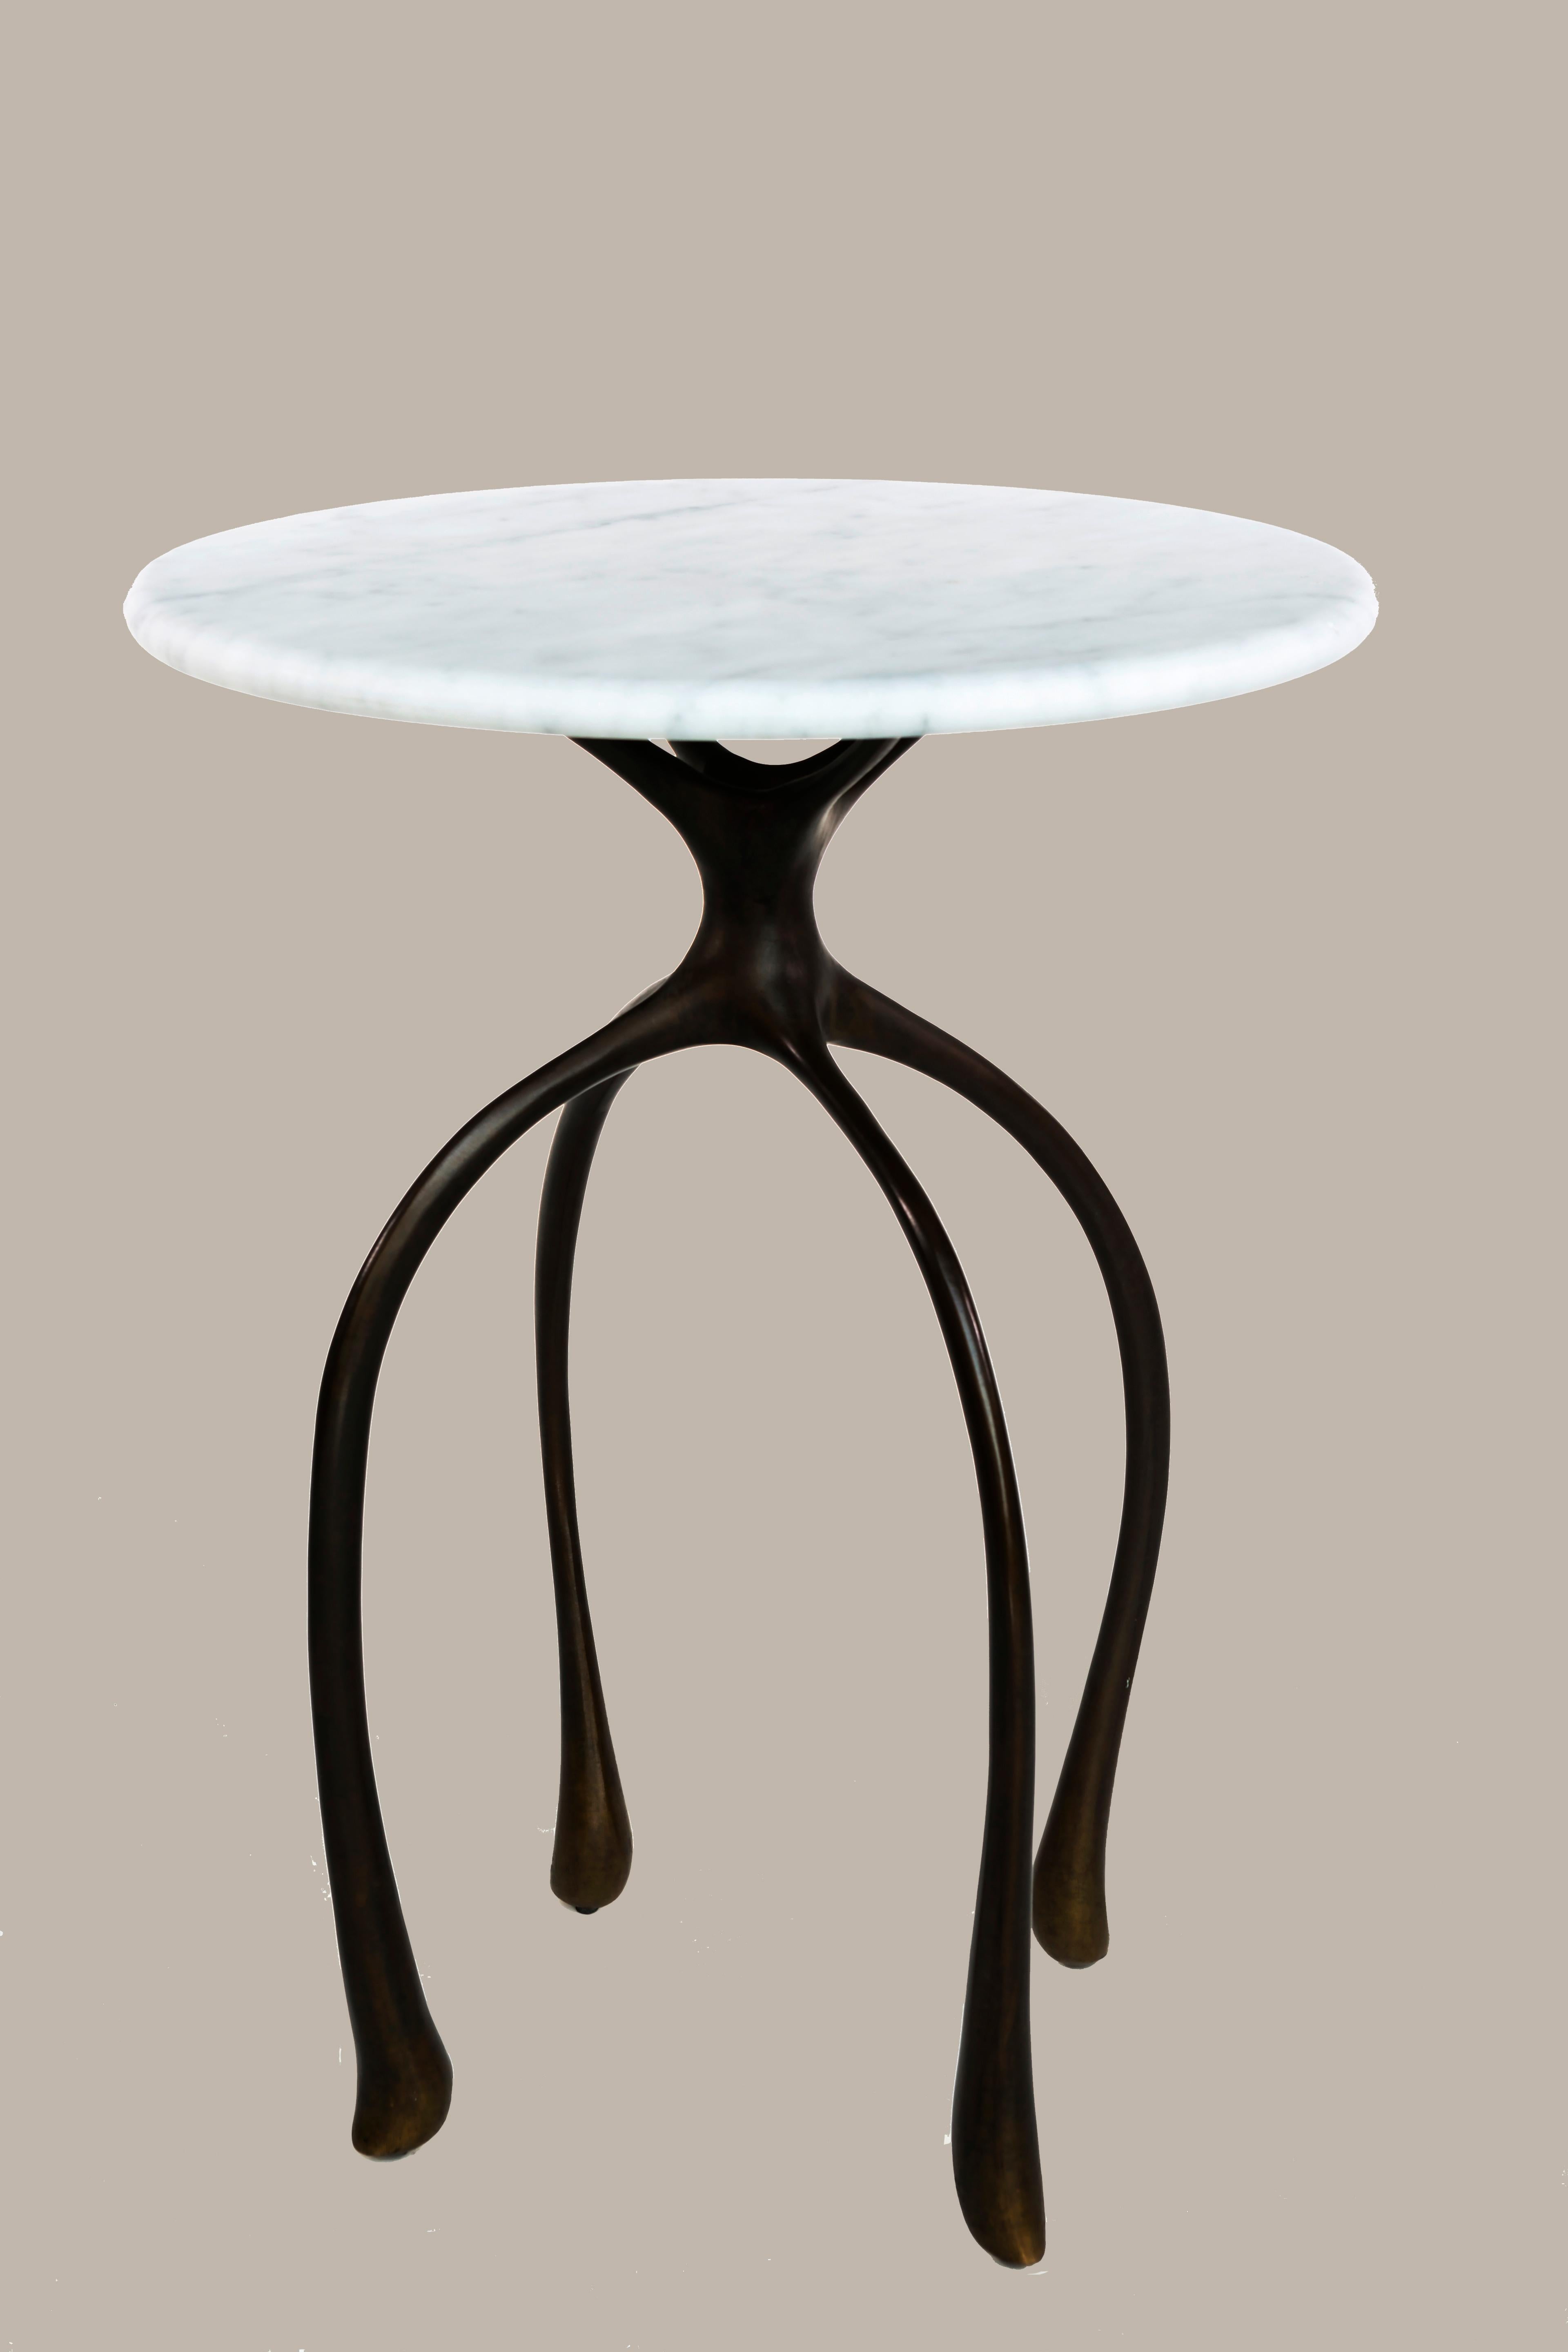 Moonshine Side Table, Cast Red Bronze, Carrara Marble, Jordan Mozer, 2010 For Sale 1